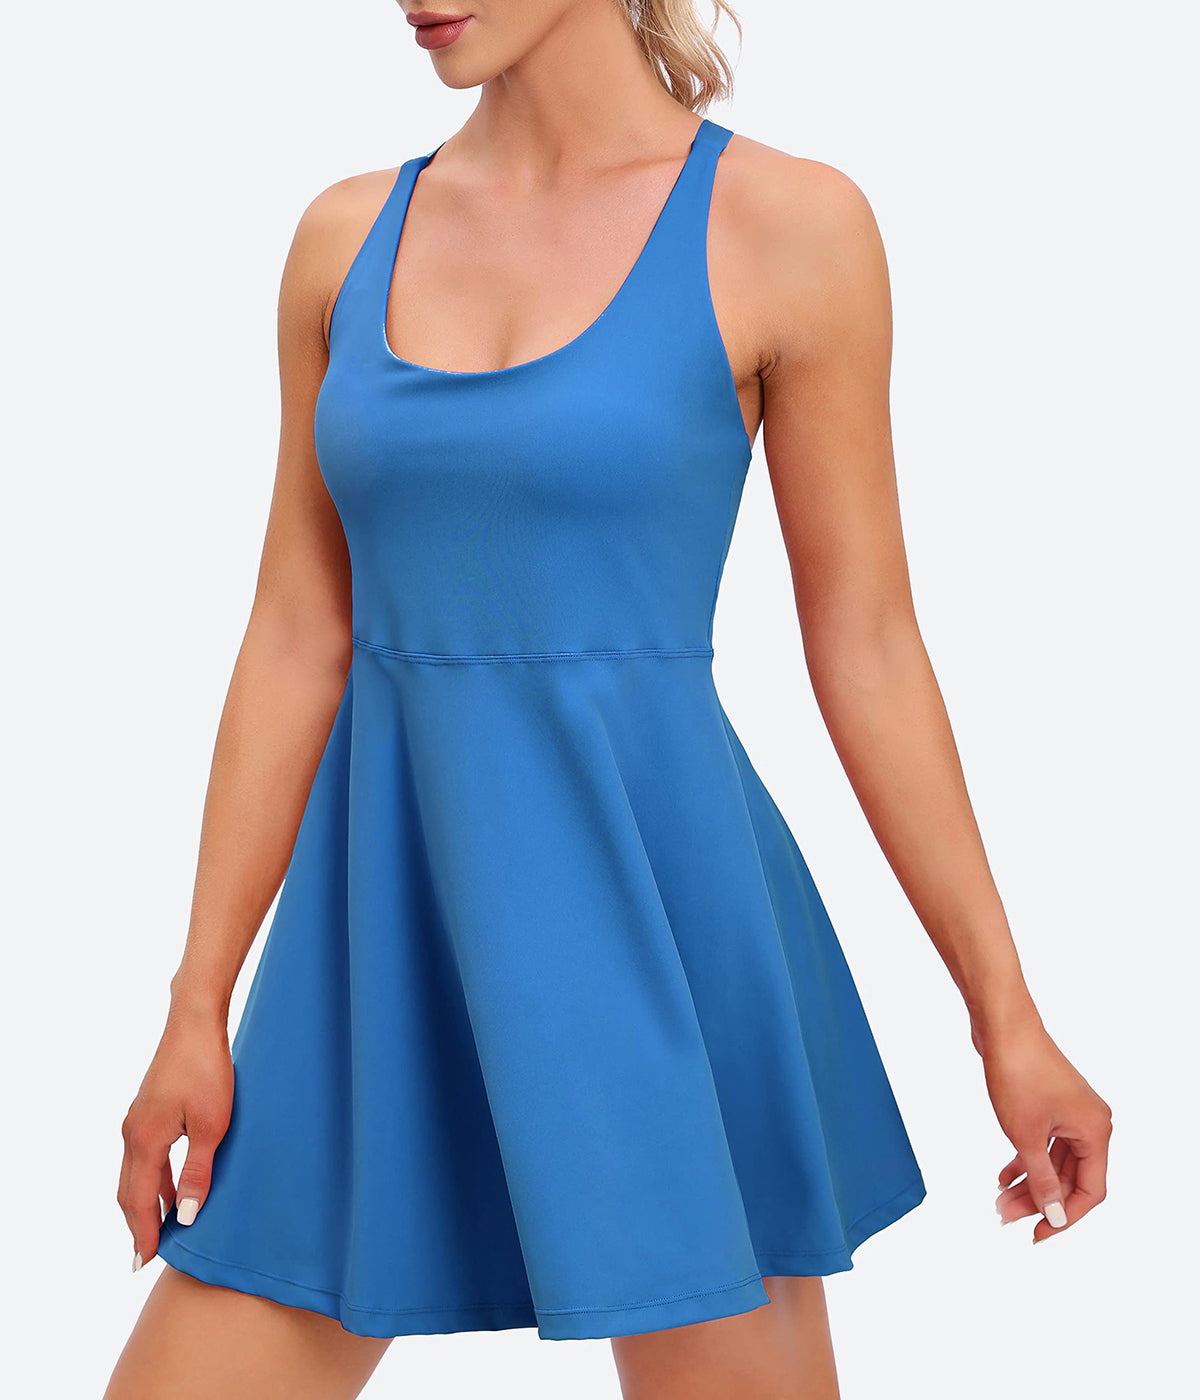 Heathyoga Womens Tennis Dress with Shorts Underneath Workout Dress-D5001 -  Blue / XS